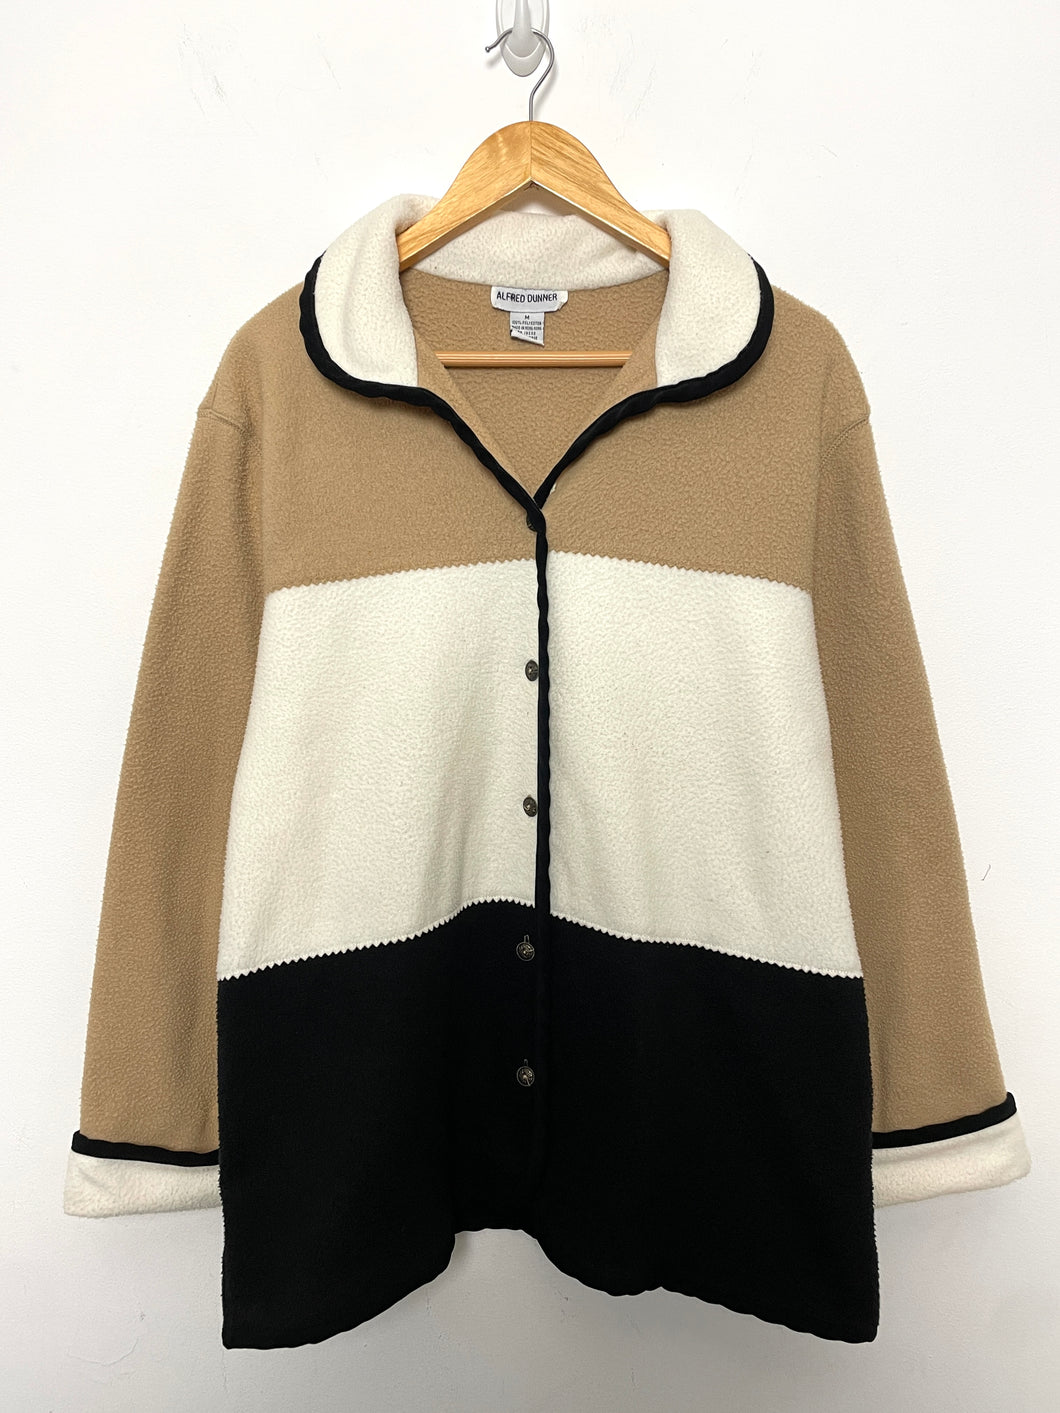 Vintage 1990s Alfred Dunner Striped Beige White and Black Color Blocked Button Up Fleece Jacket (size adult Medium)